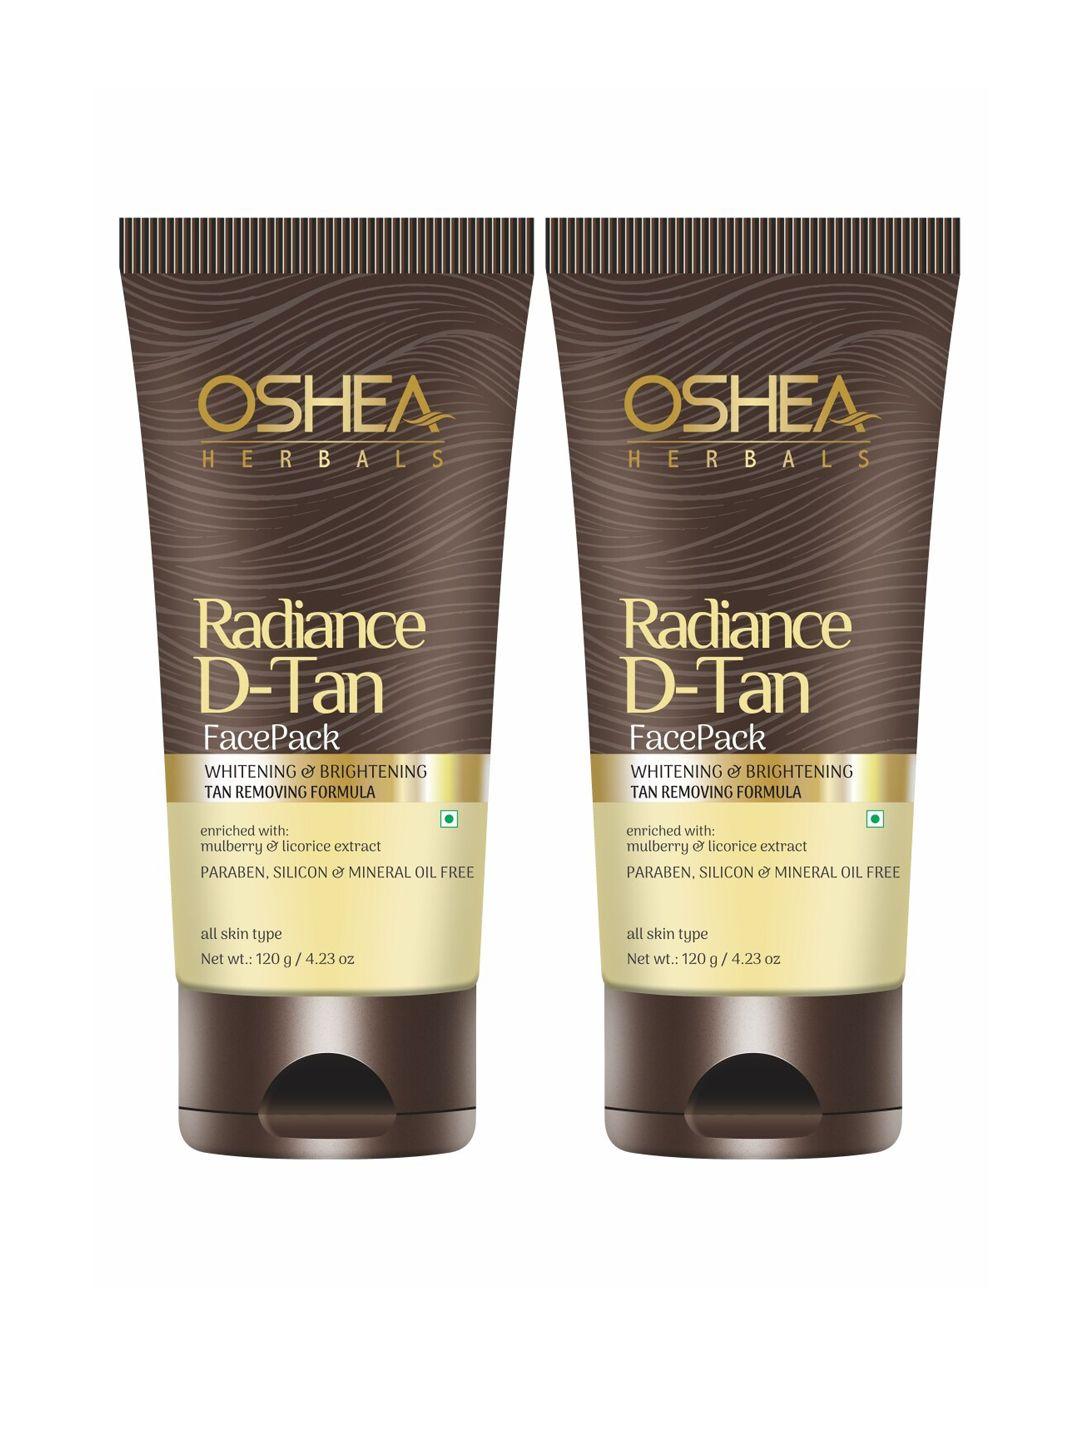 oshea herbals set of 2 radiance d-tan face pack